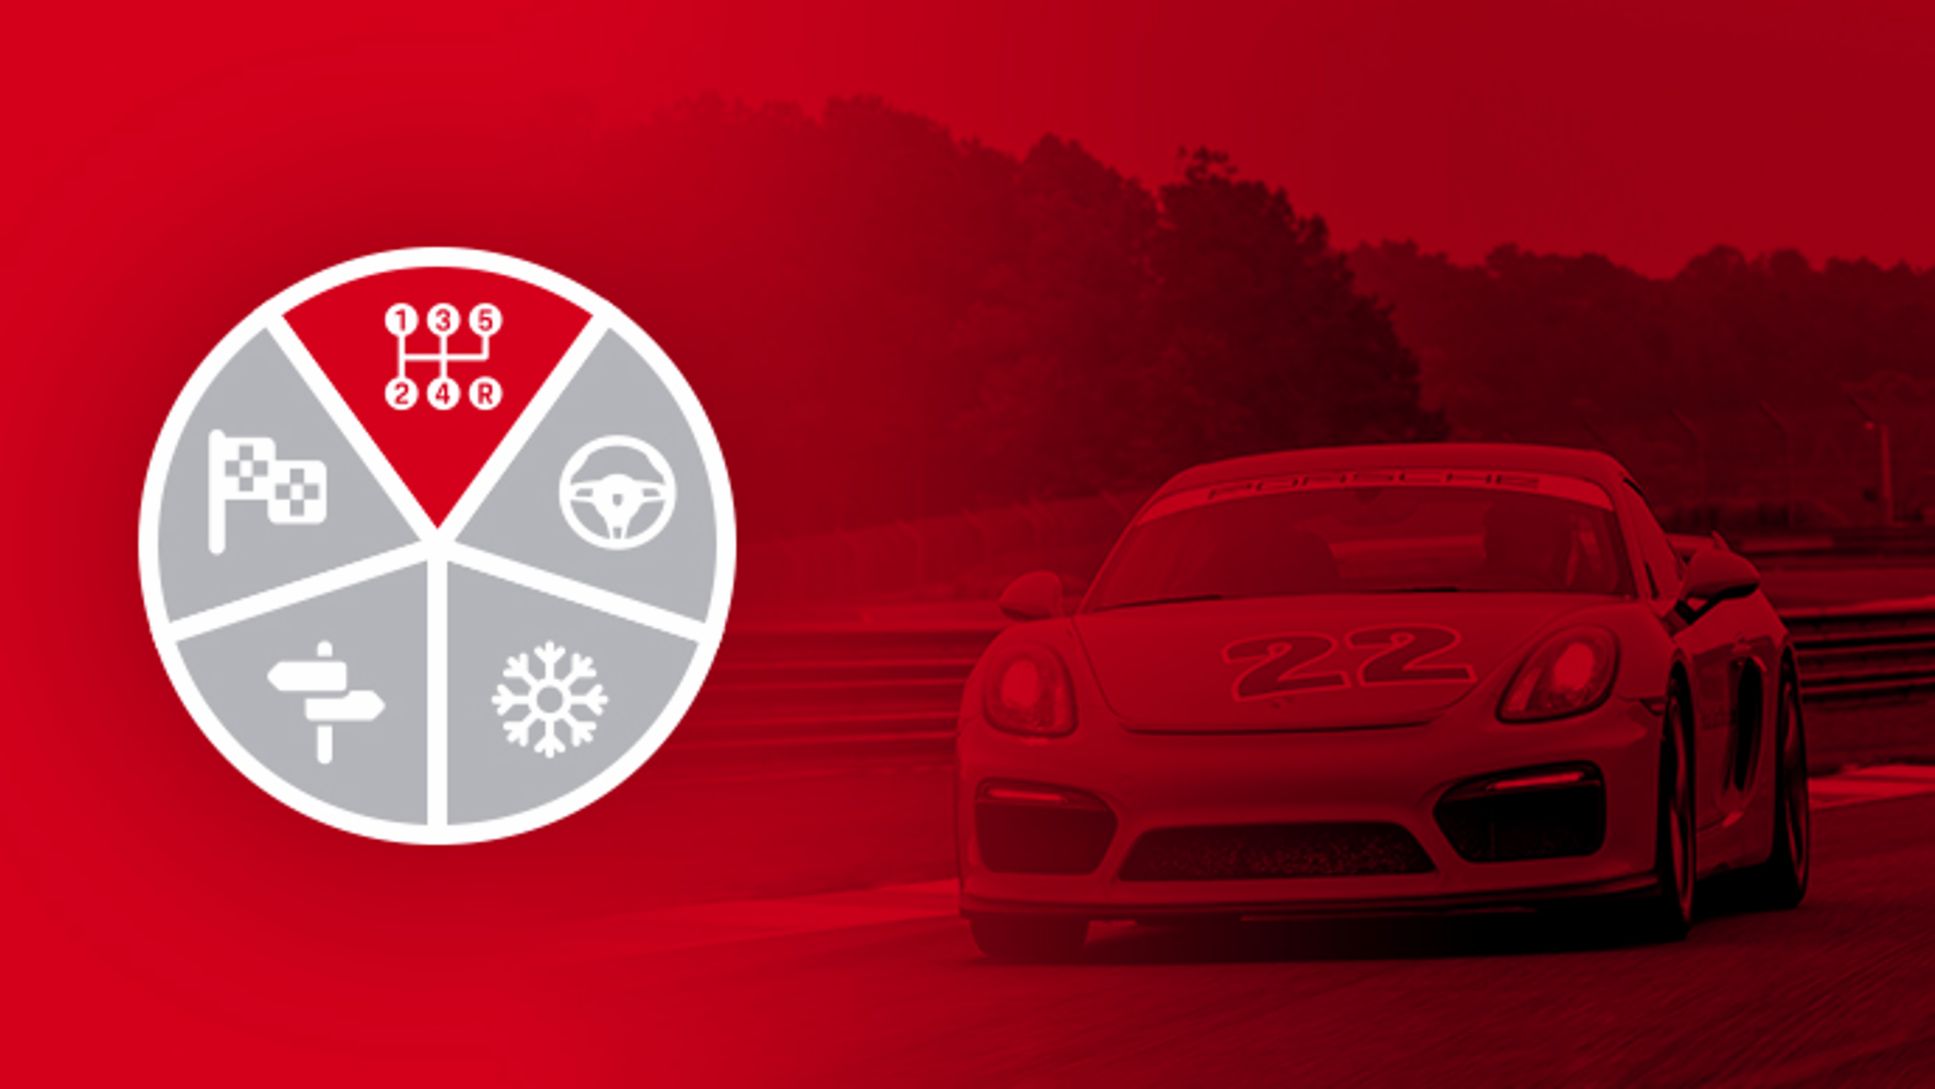 Porsche Track Experience